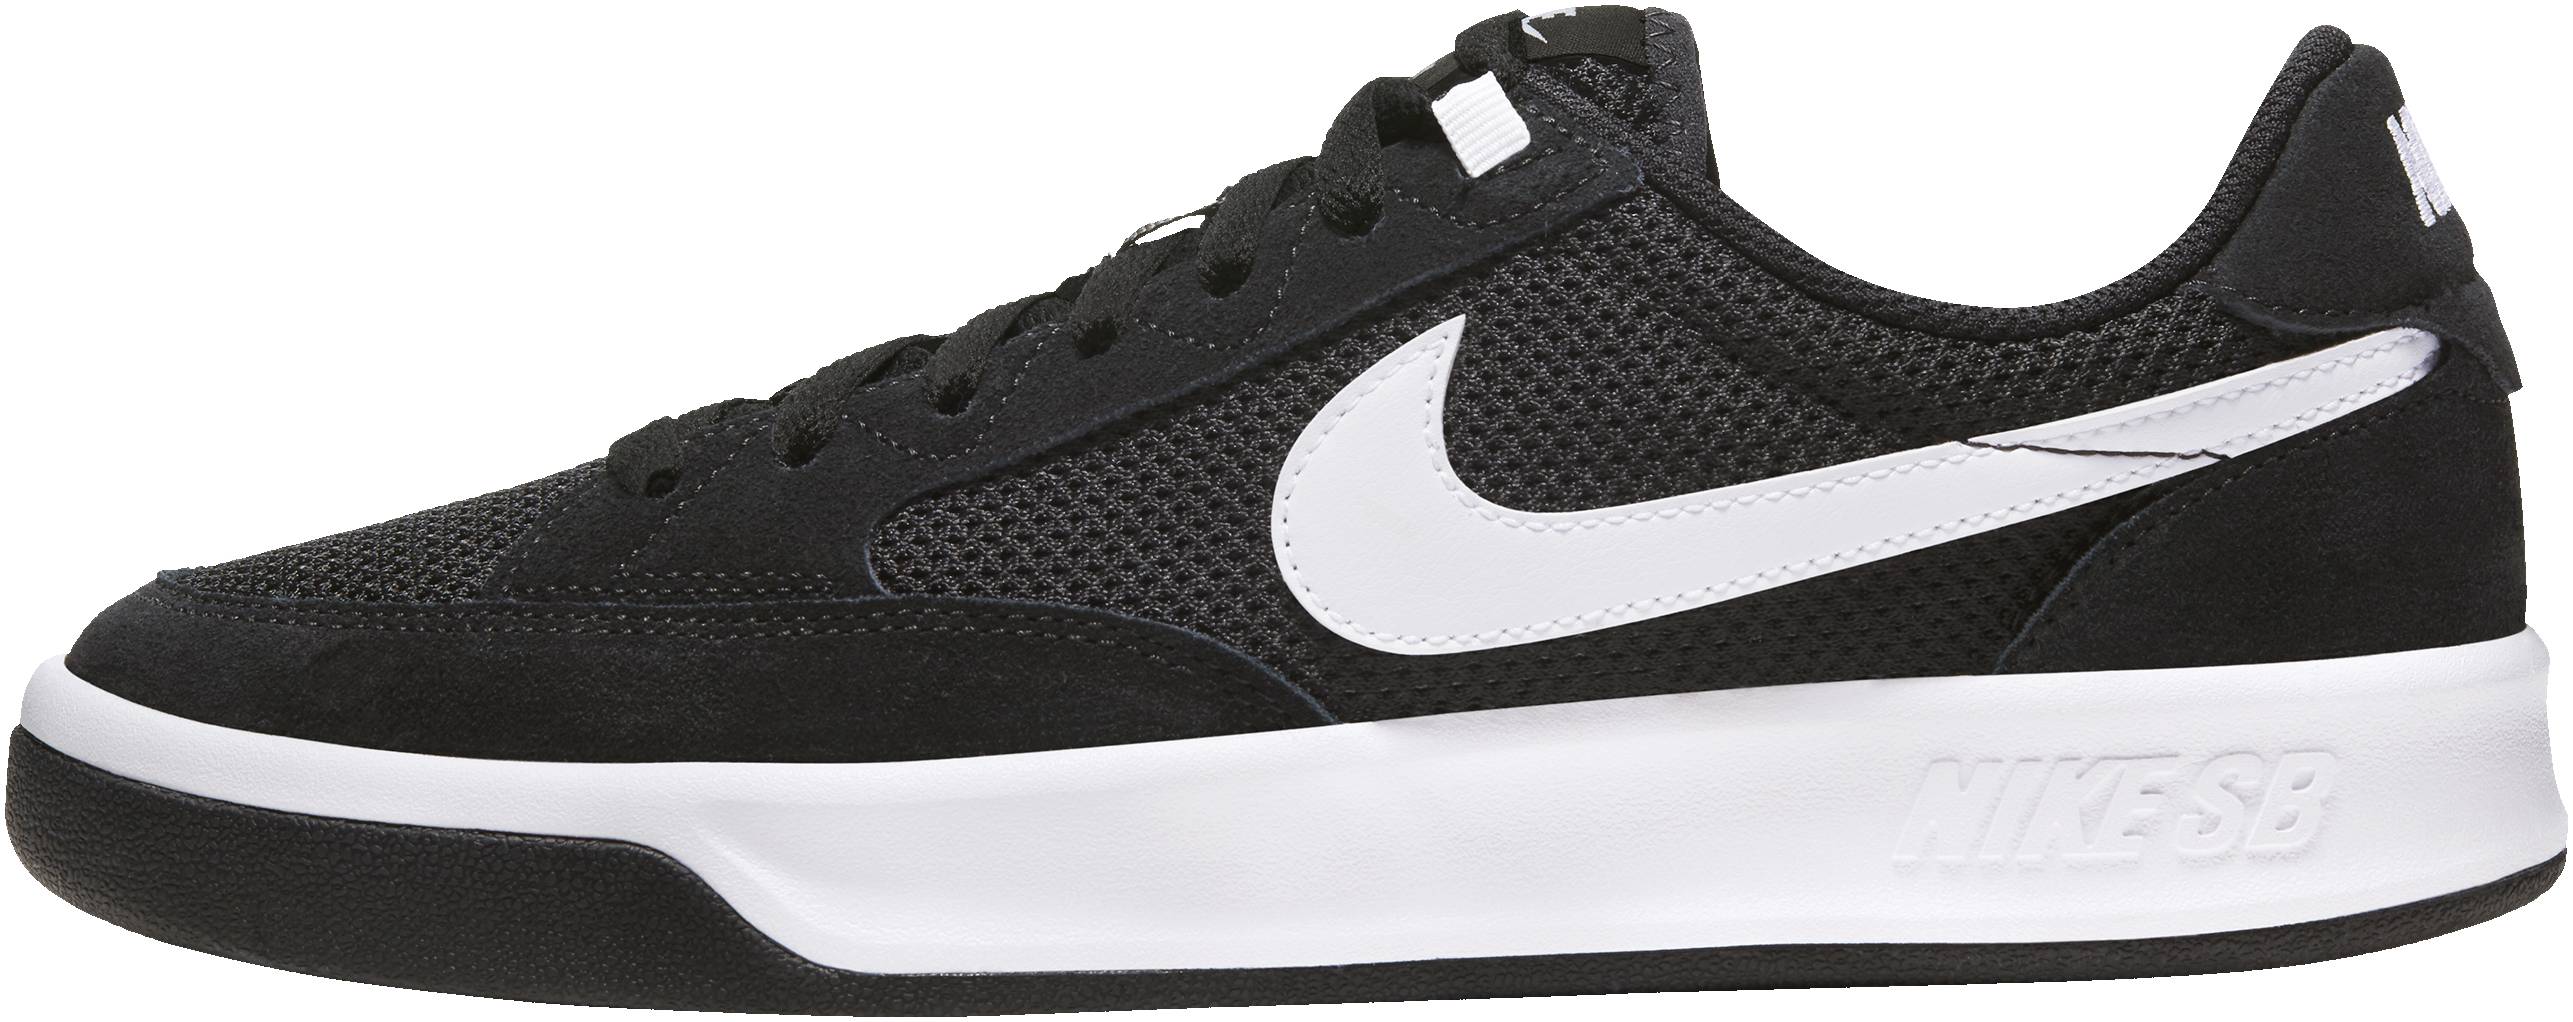 Nike SB nike sb black white Adversary sneakers in black (only $55) | RunRepeat